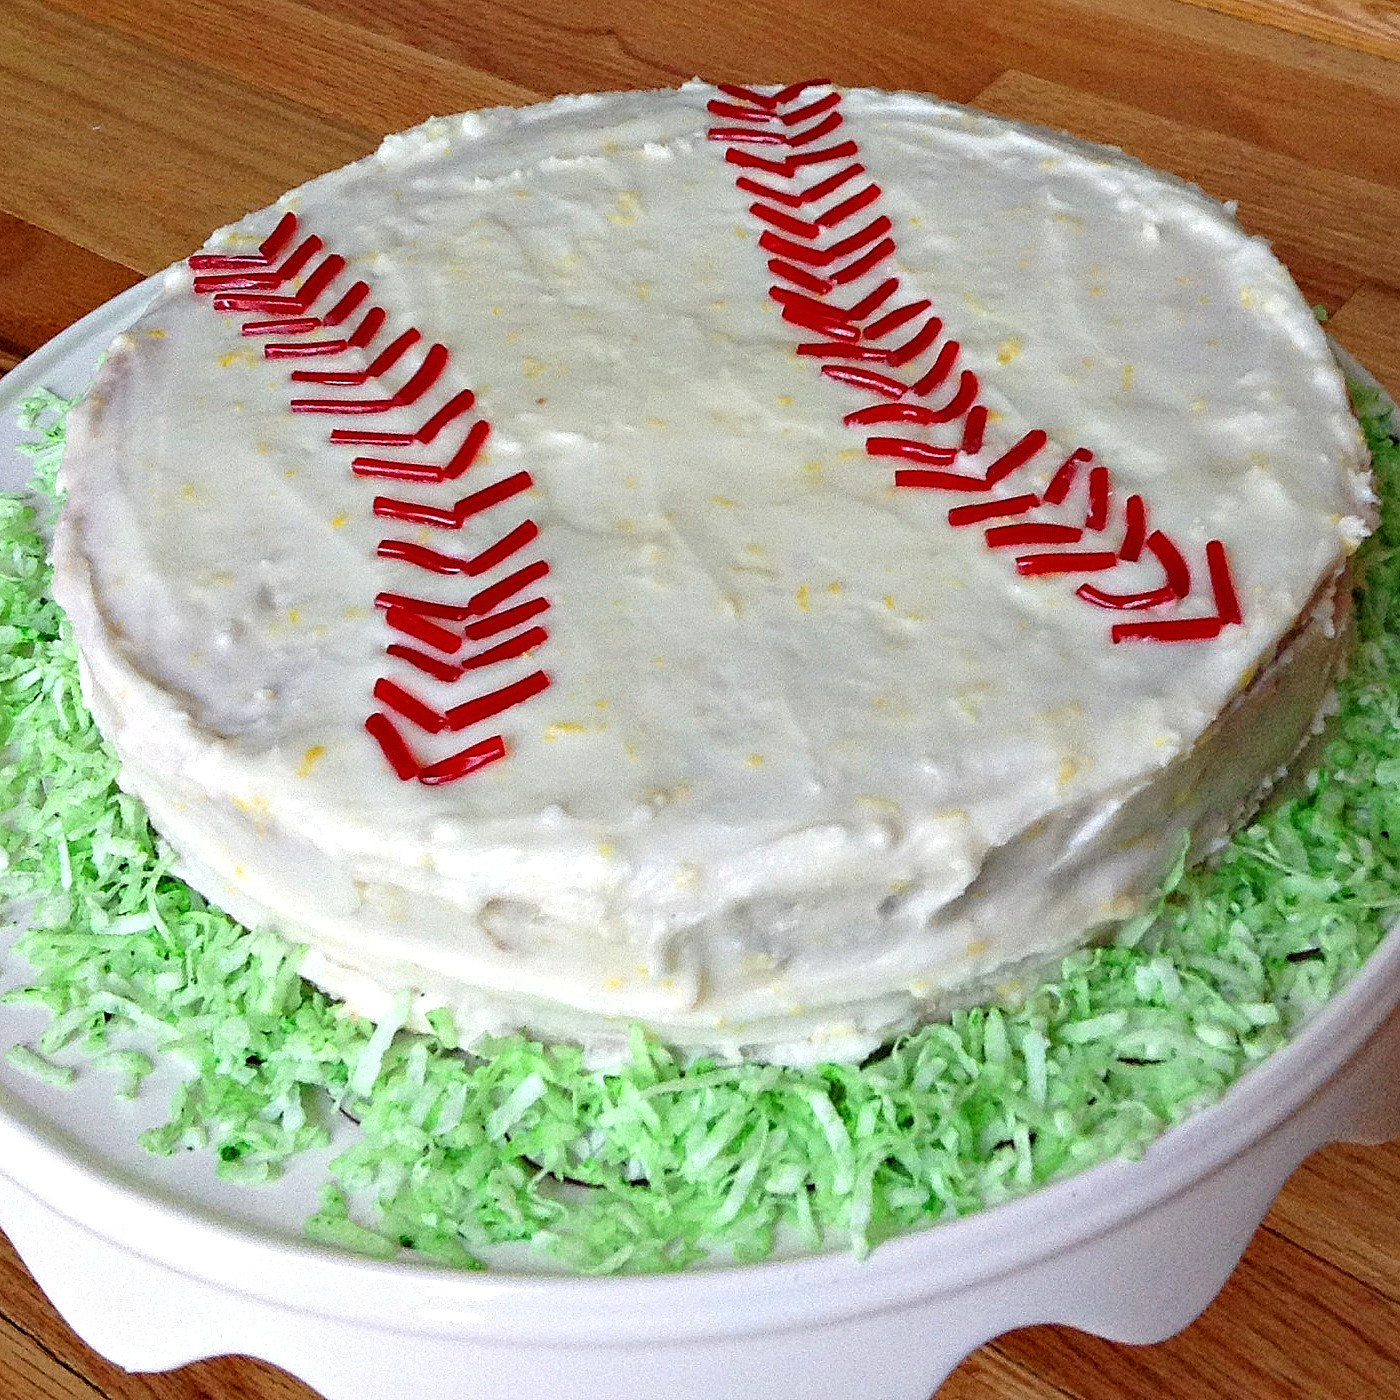 Best ideas about Baseball Birthday Cake
. Save or Pin Baseball Birthday Cake Now.